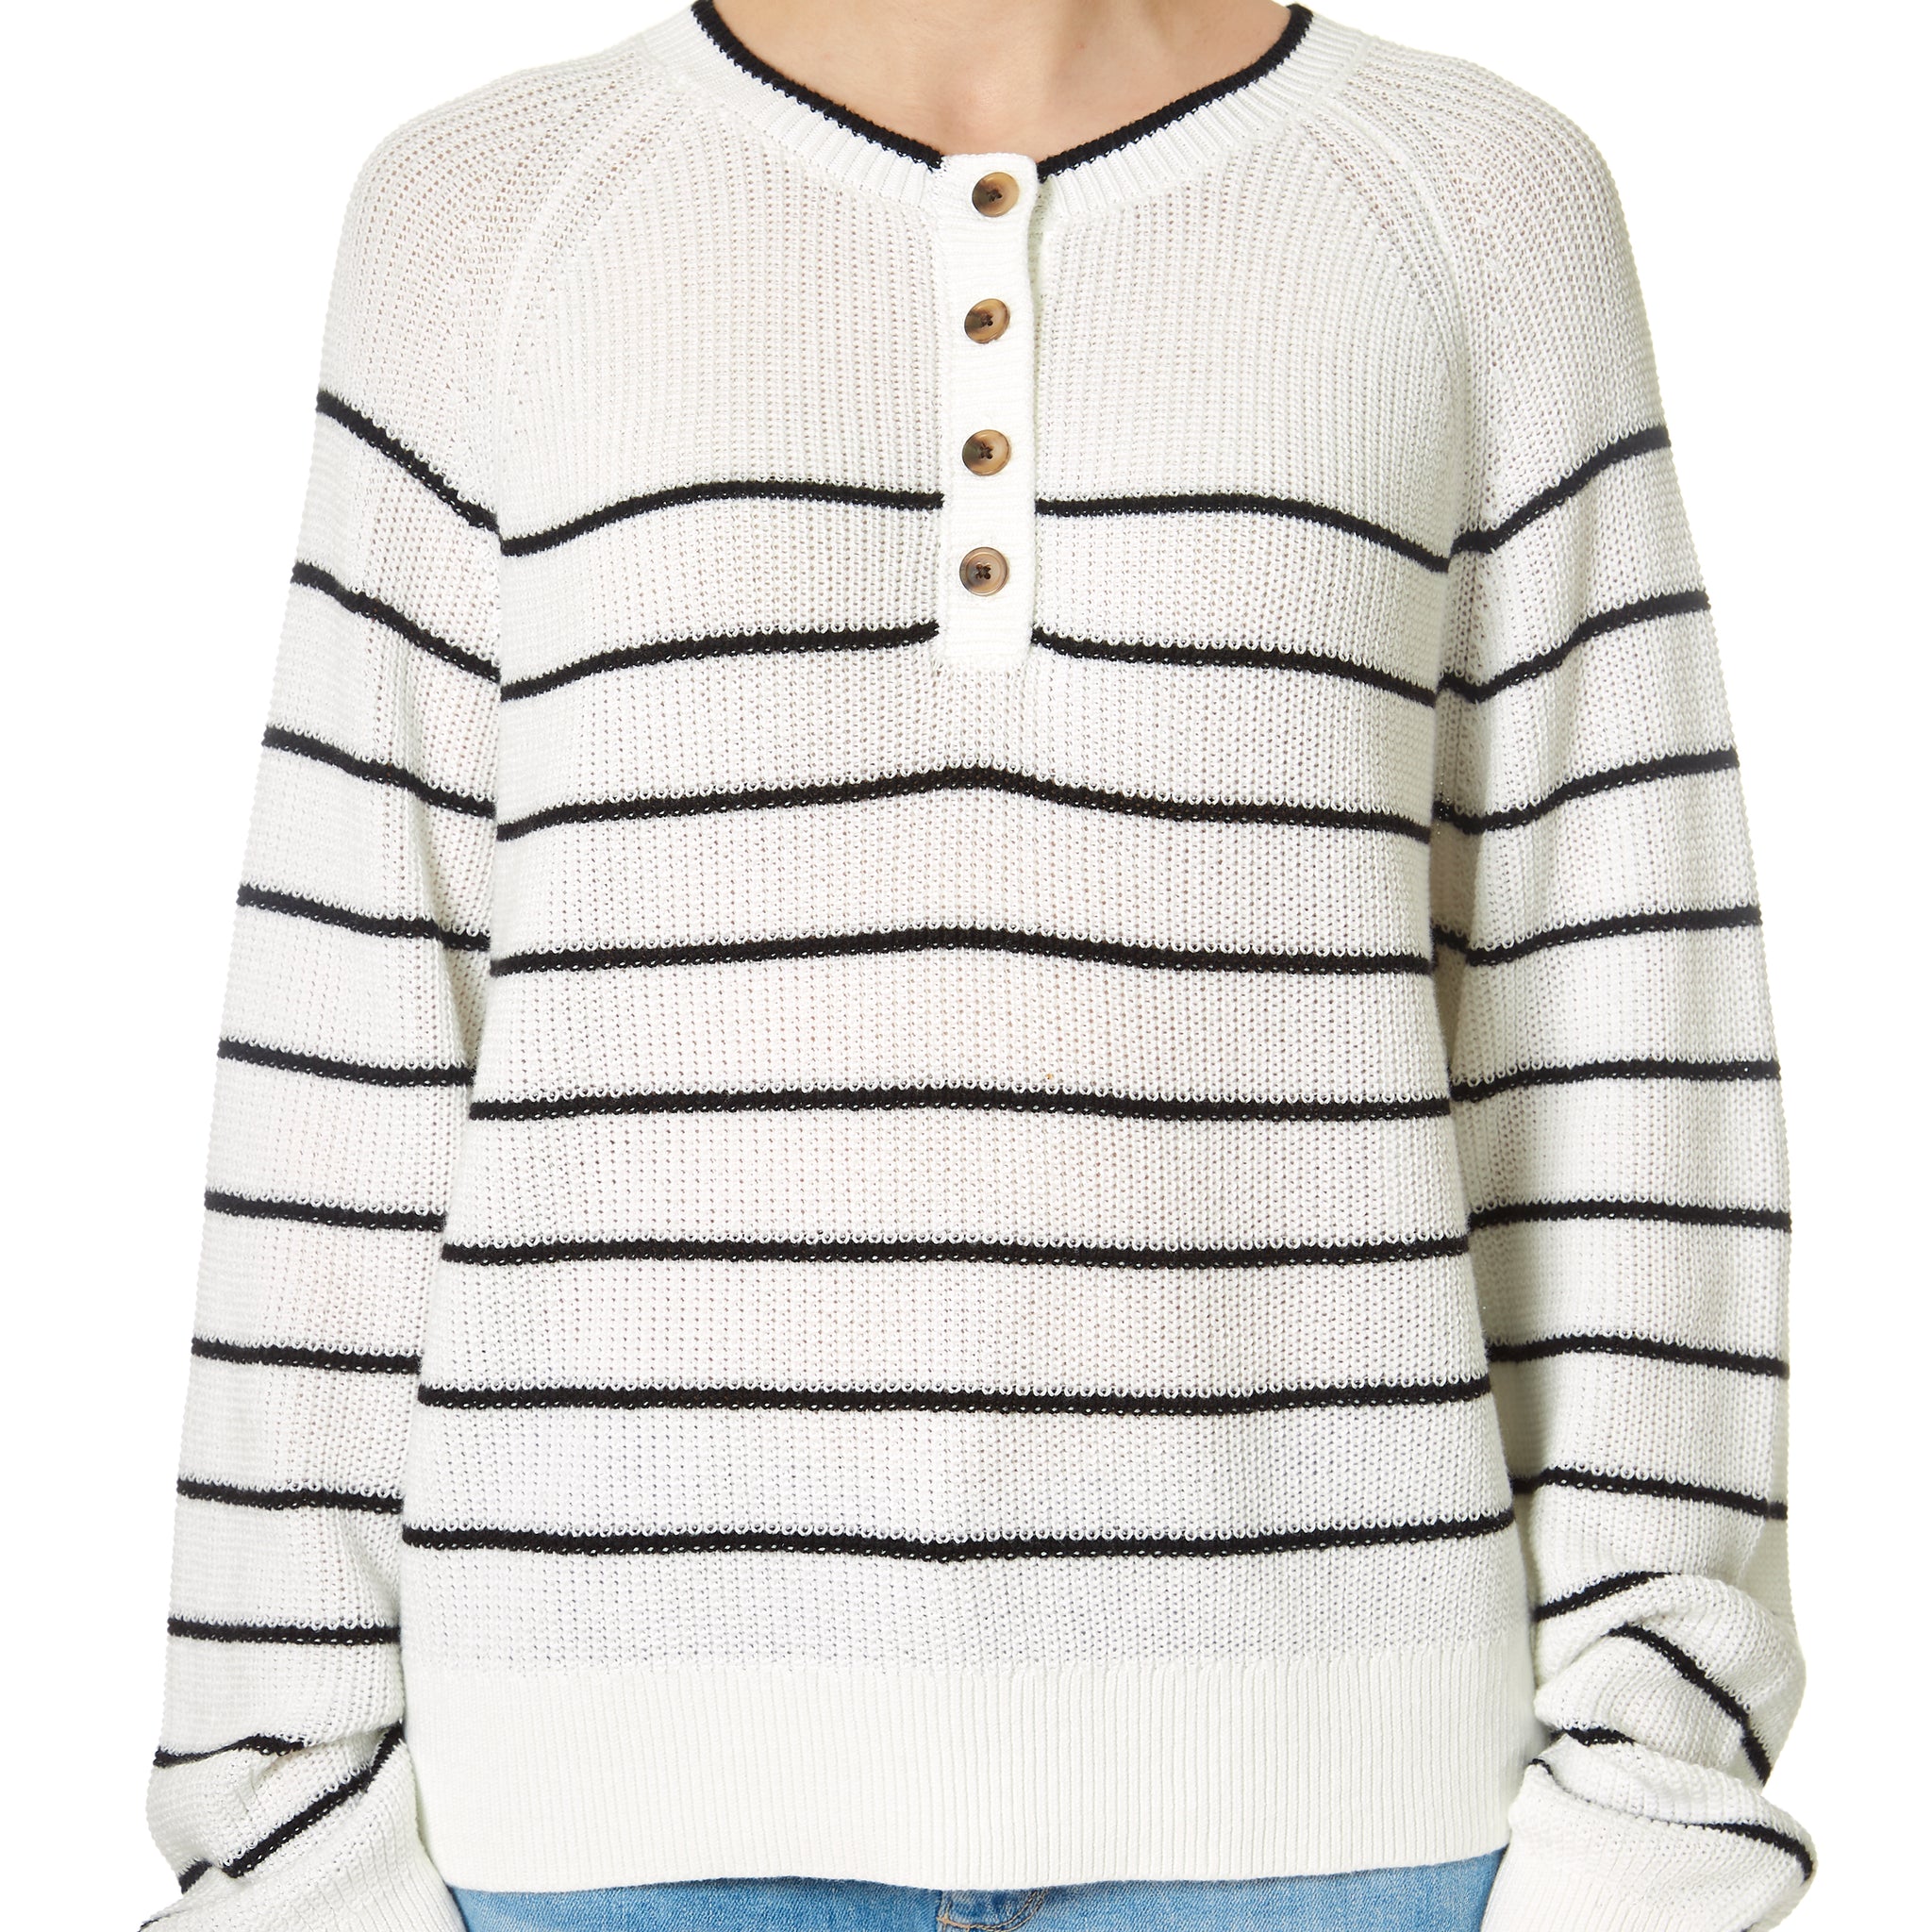 Kierra Milk Black Striped Sweater